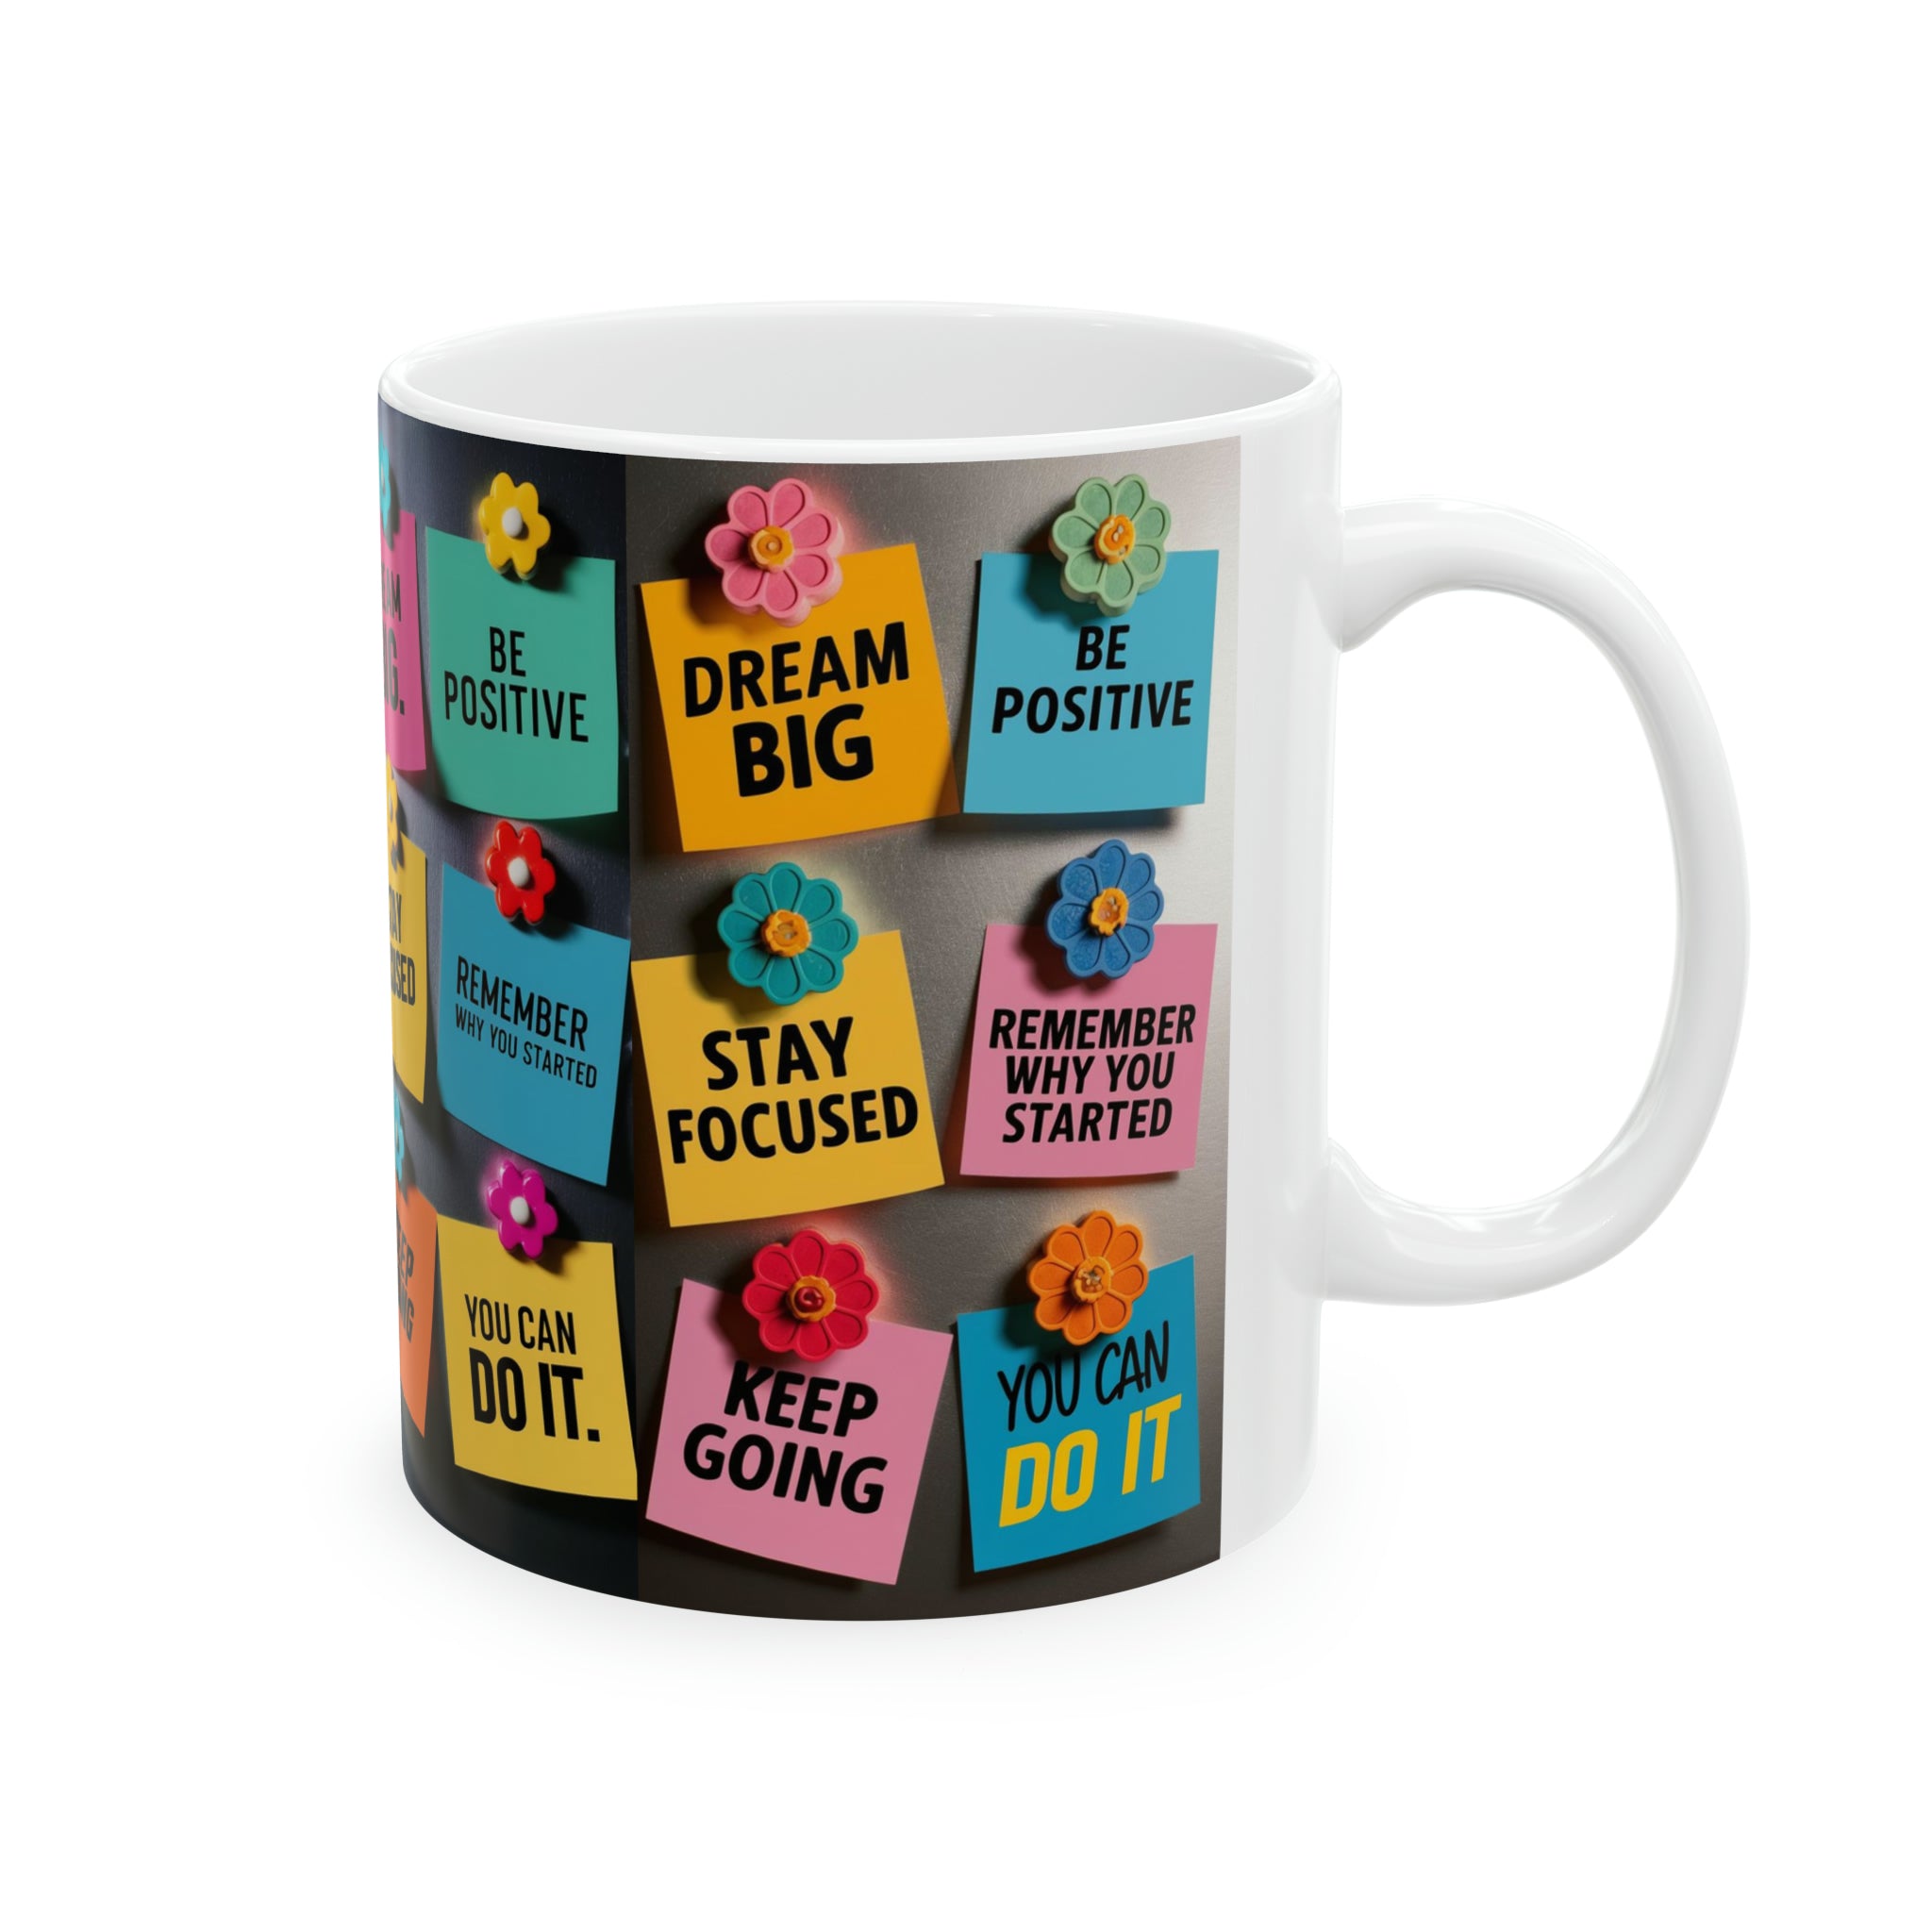 Be Positive, Stay Focused, Dream Big - Ceramic Mug, 11oz